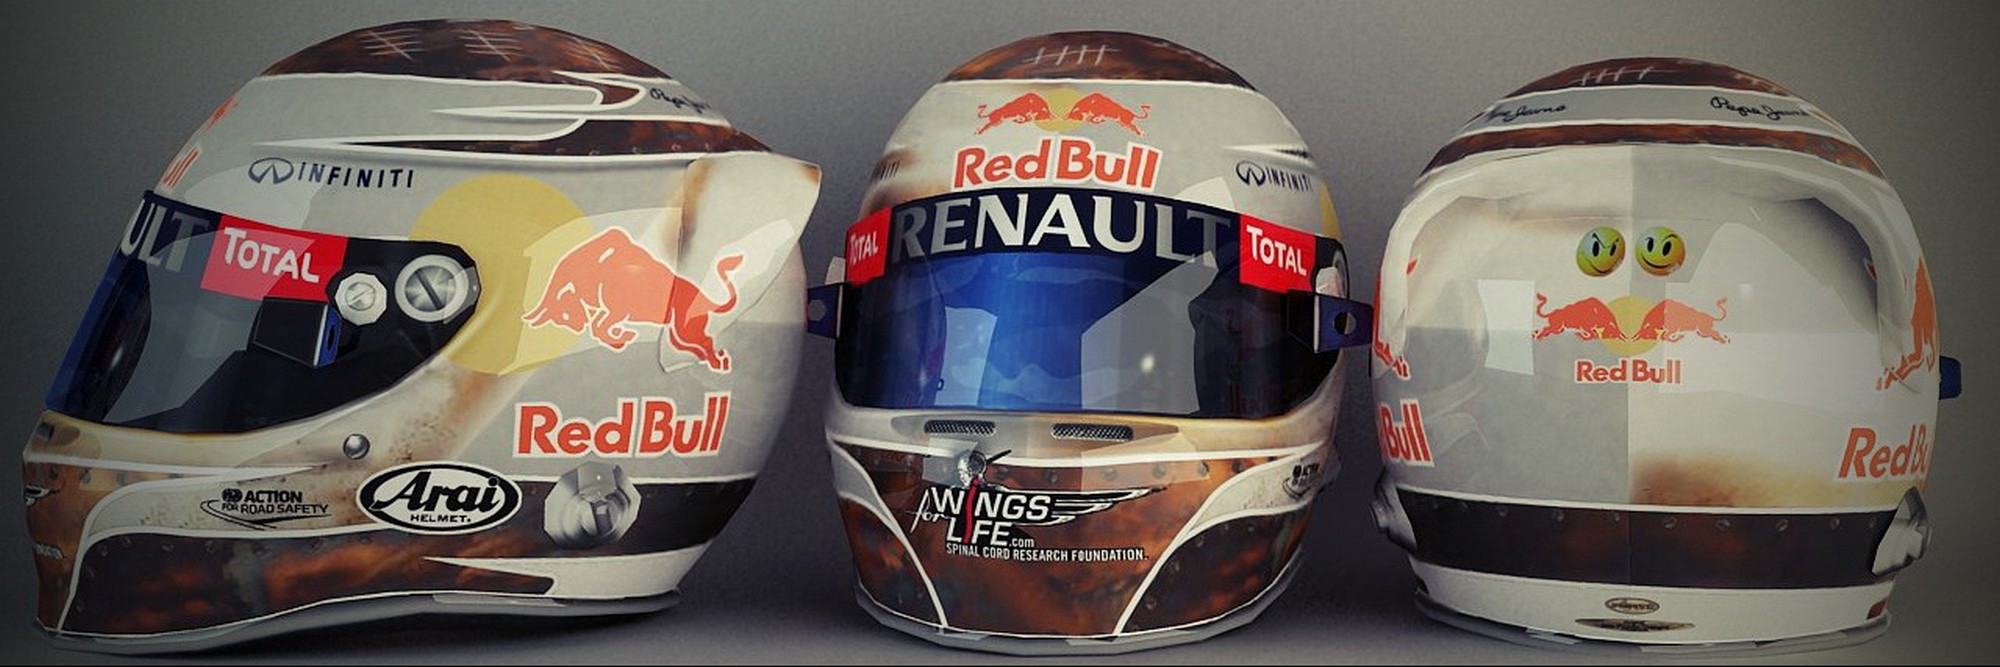 Шлем Себастьяна Феттеля на Гран-При Италии 2012 | 2012 Italian Grand Prix helmet of Sebastian Vettel